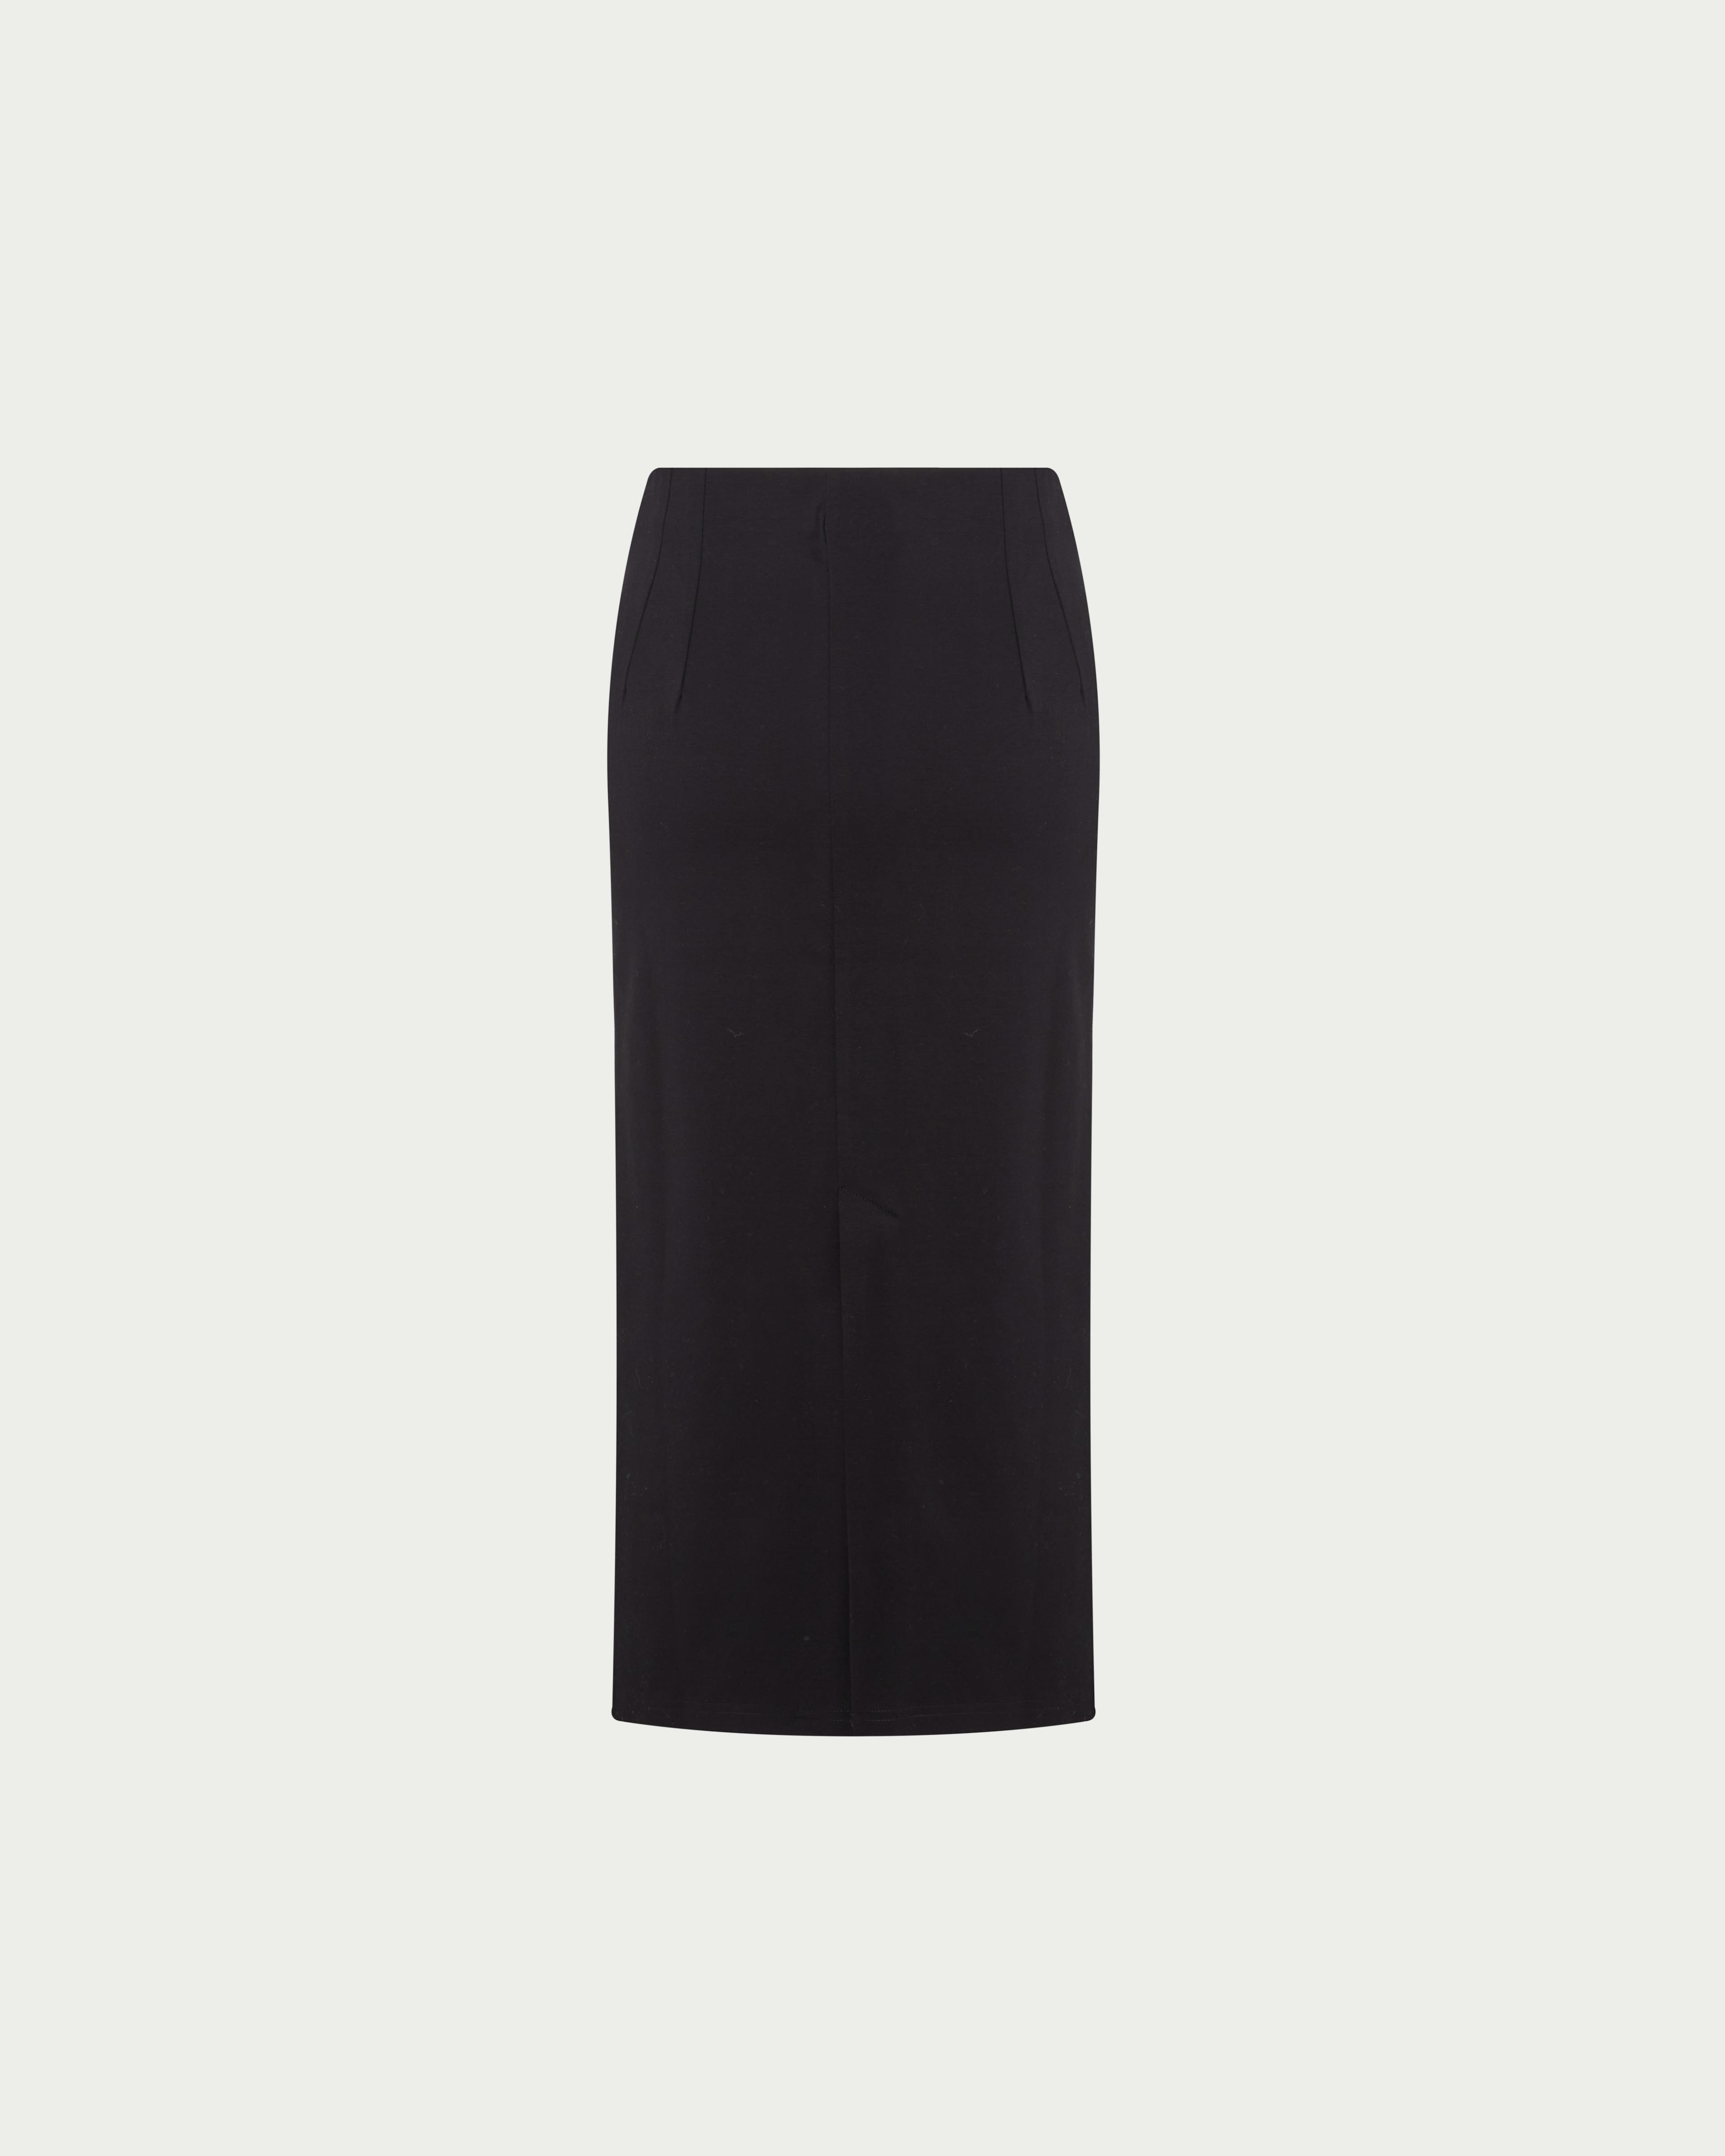 https://a.storyblok.com/f/199965/4000x5000/28748f99b5/capri-skirt-black.jpg